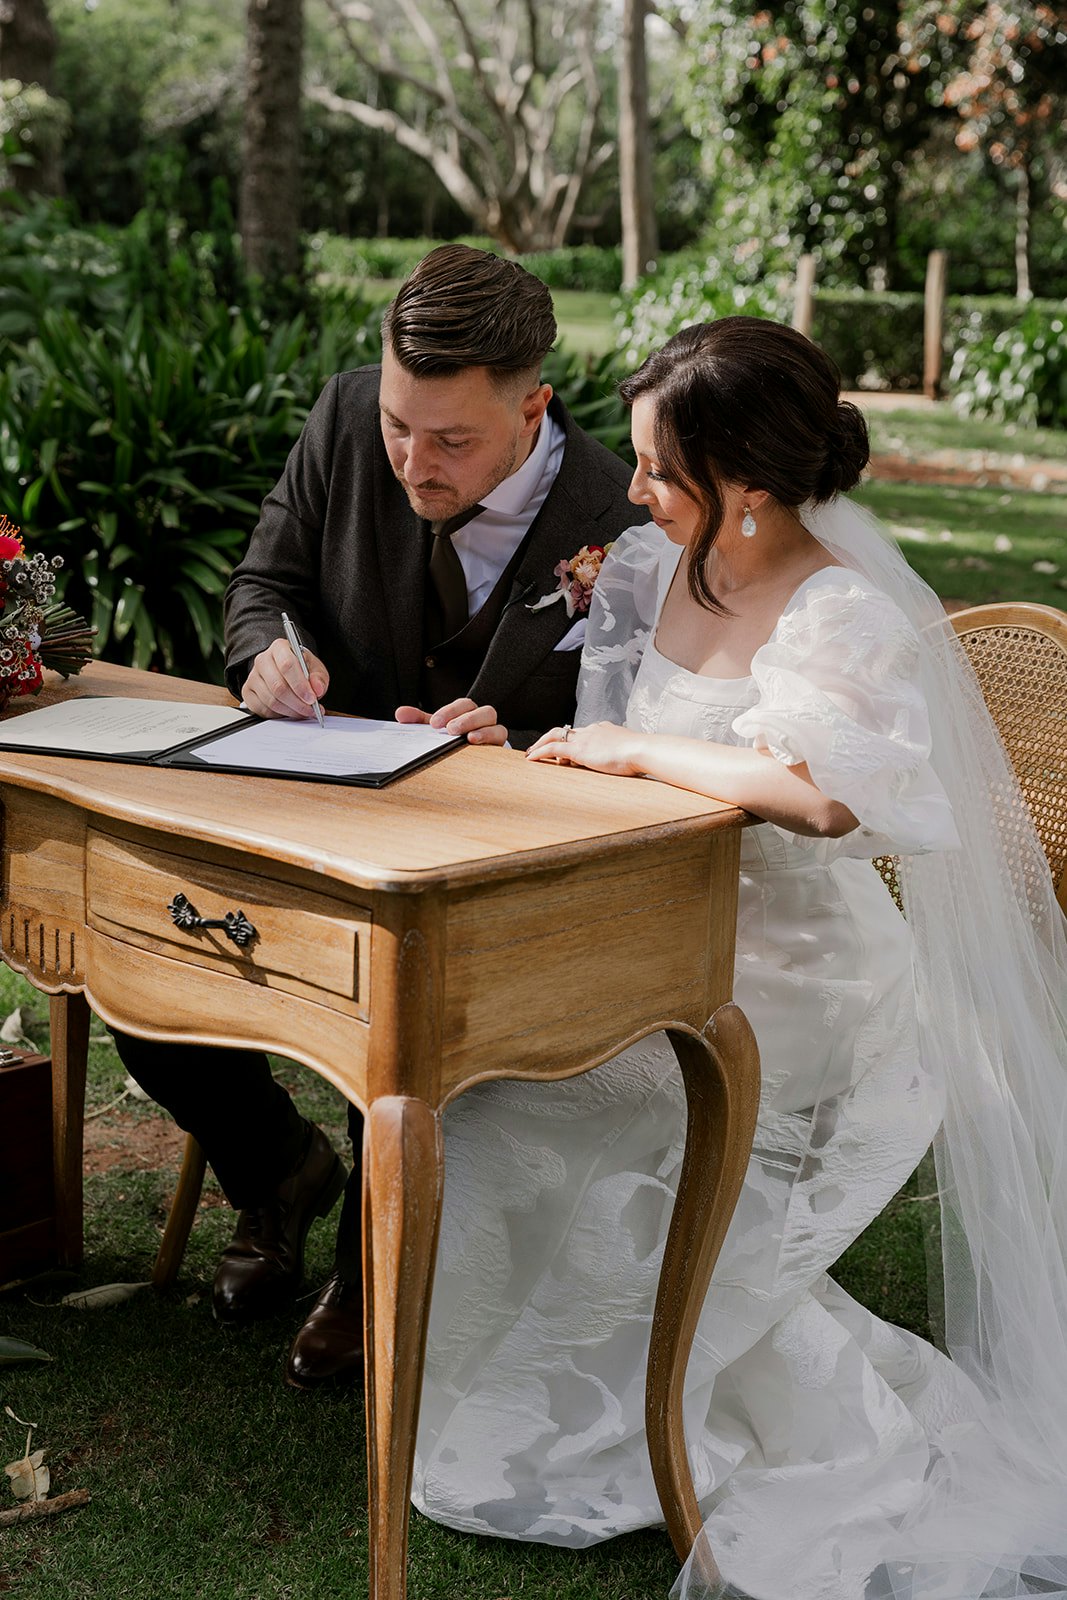 Bride and groom signing wedding certificate